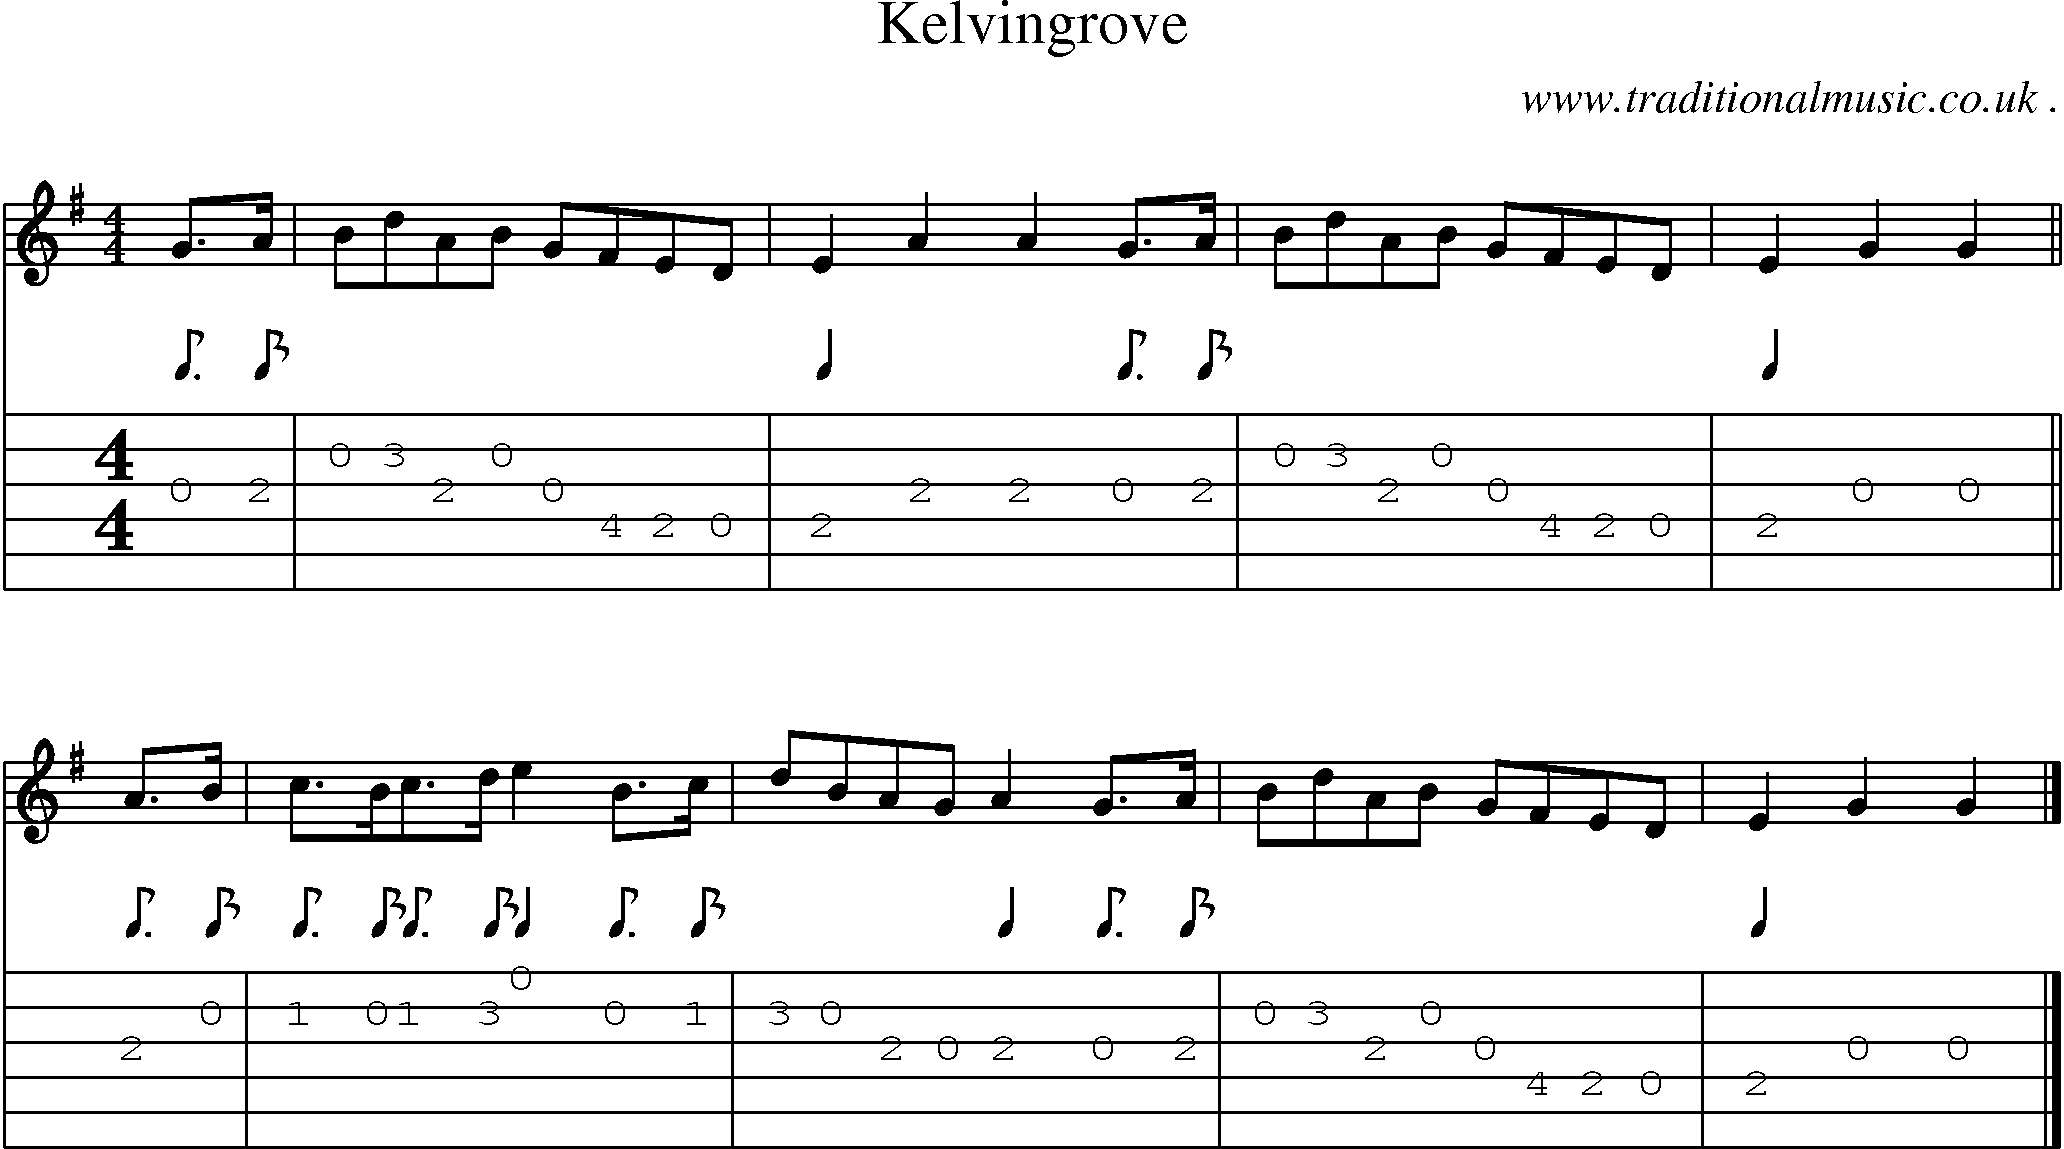 Sheet-music  score, Chords and Guitar Tabs for Kelvingrove